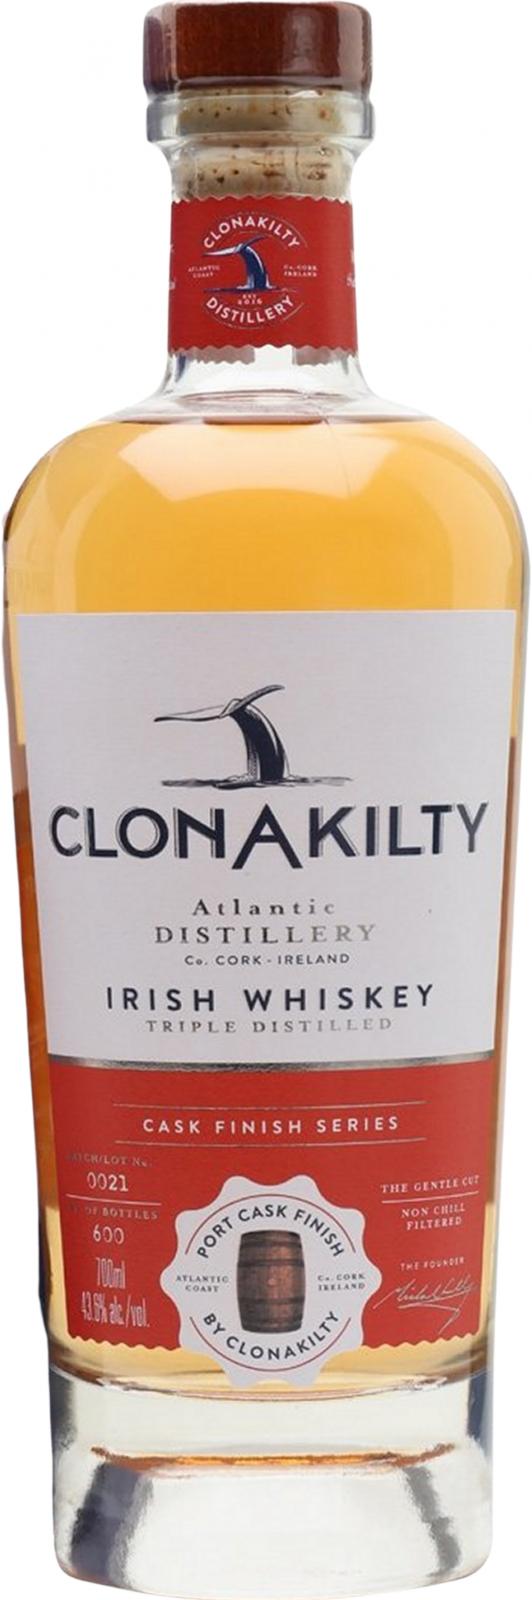 Clonakilty Port Cask Finish Clky